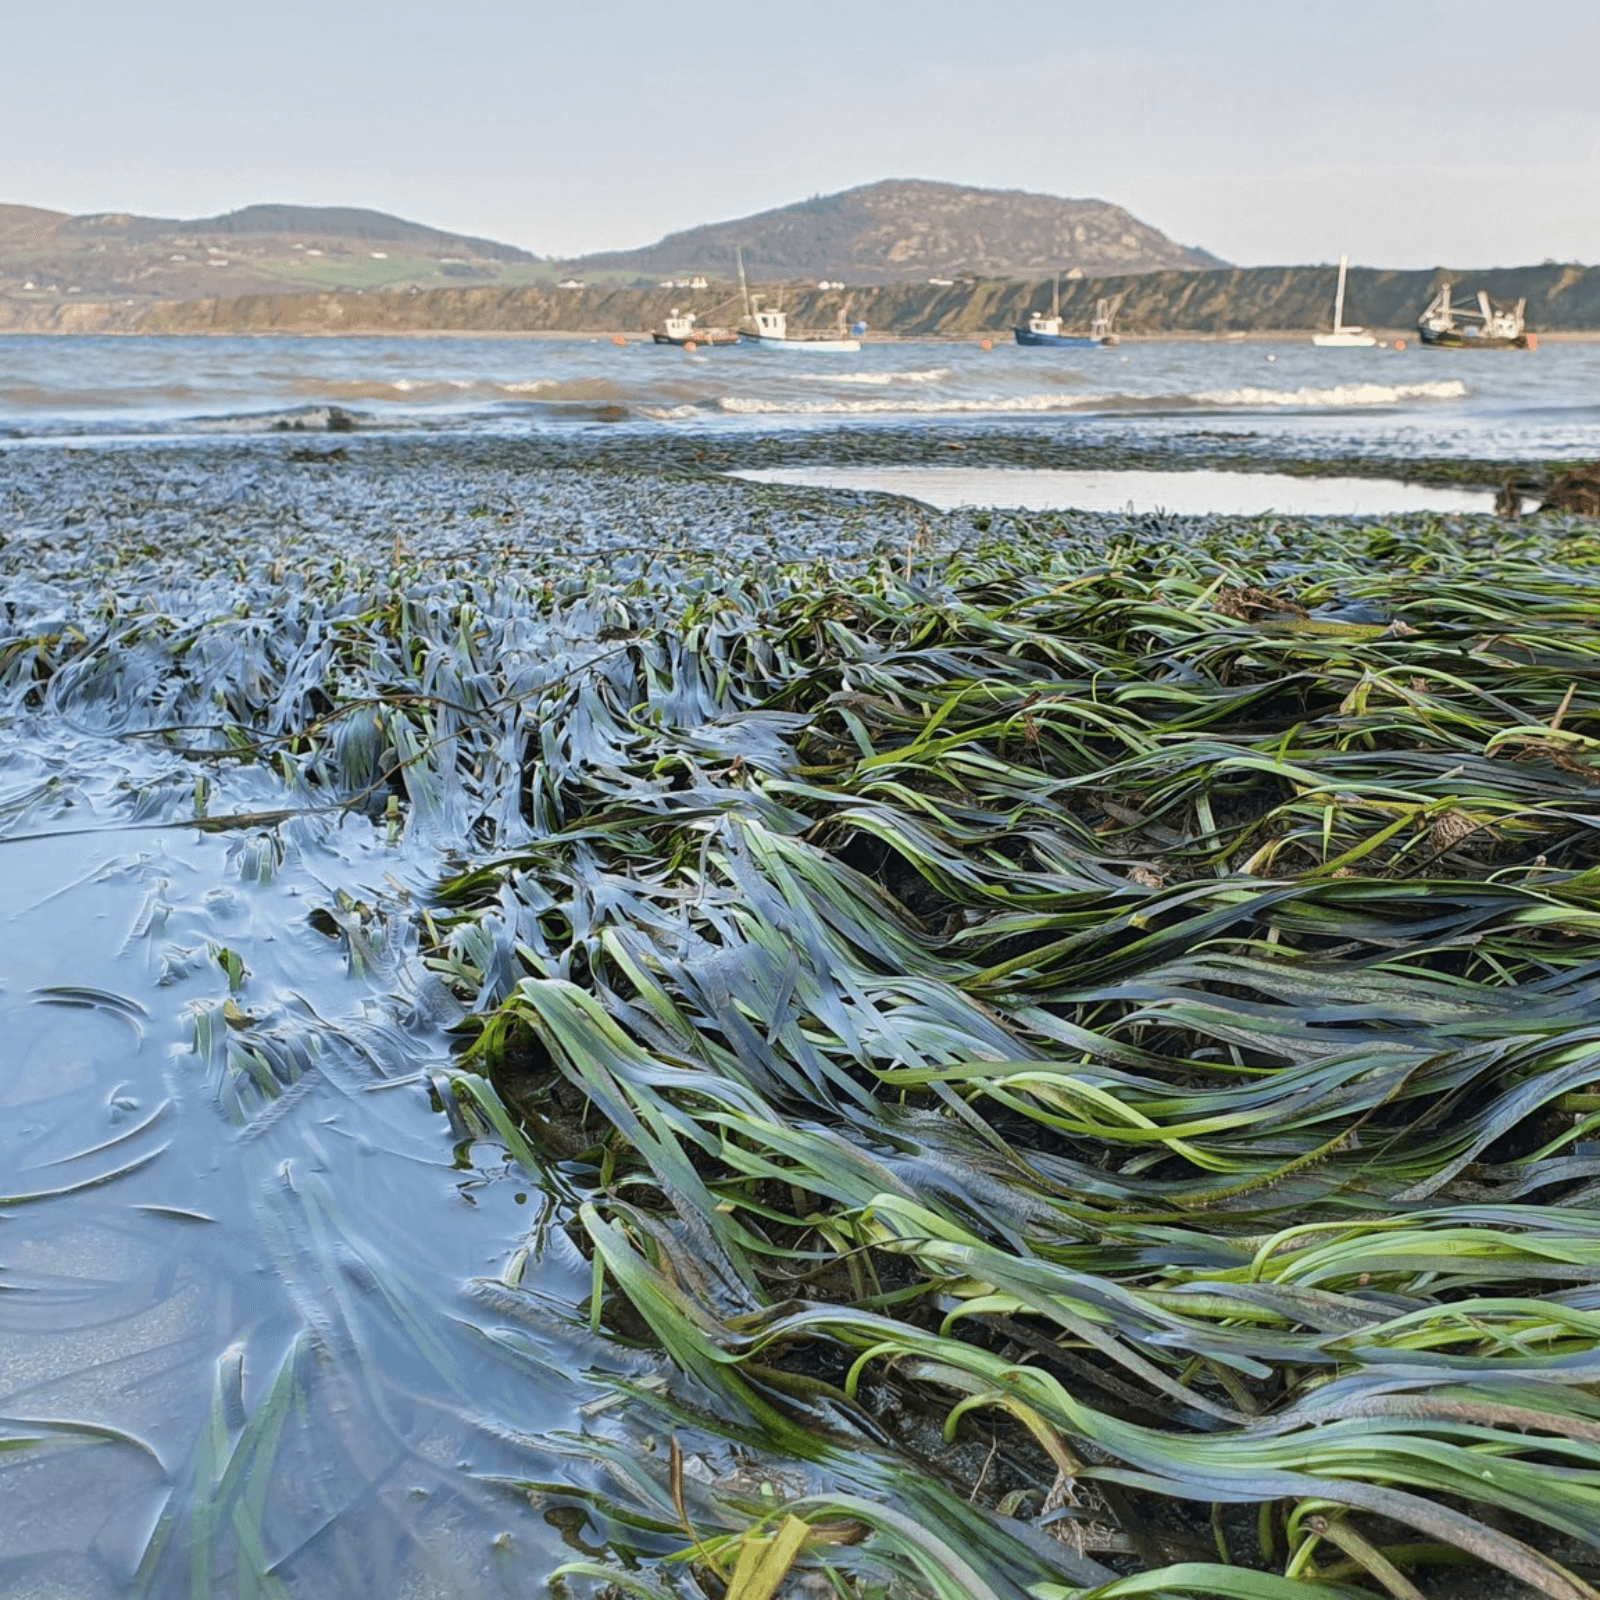 Seagrass Network Cymru submit National Seagrass Action Plan to Senedd